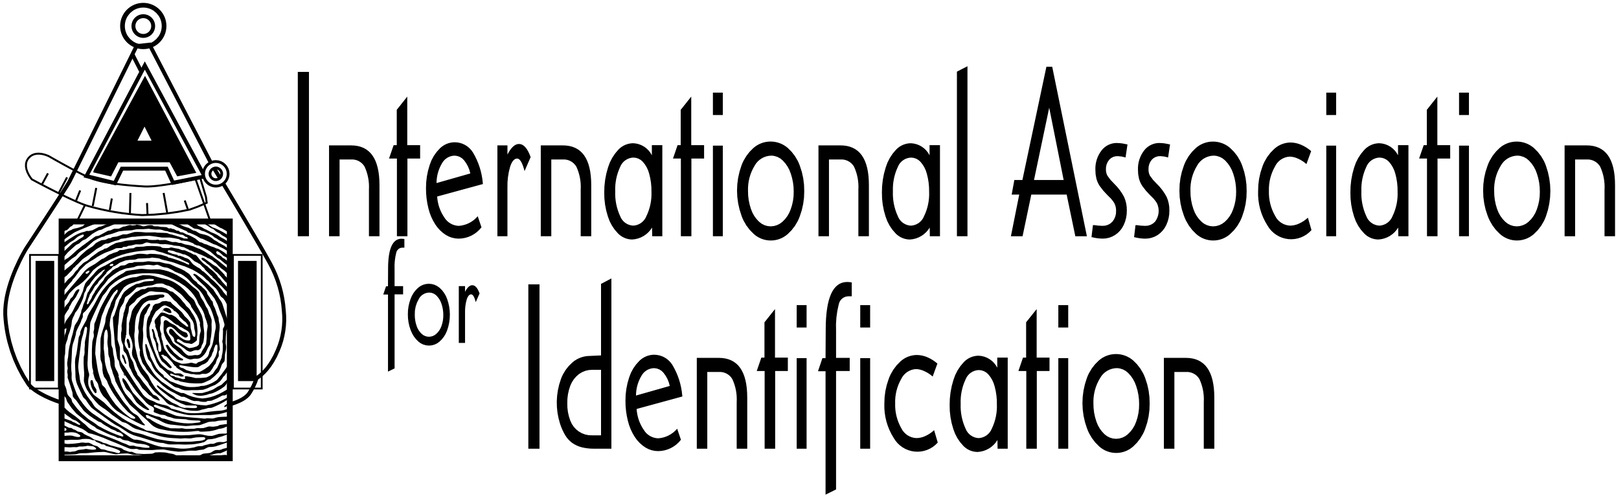 International Association for Identification